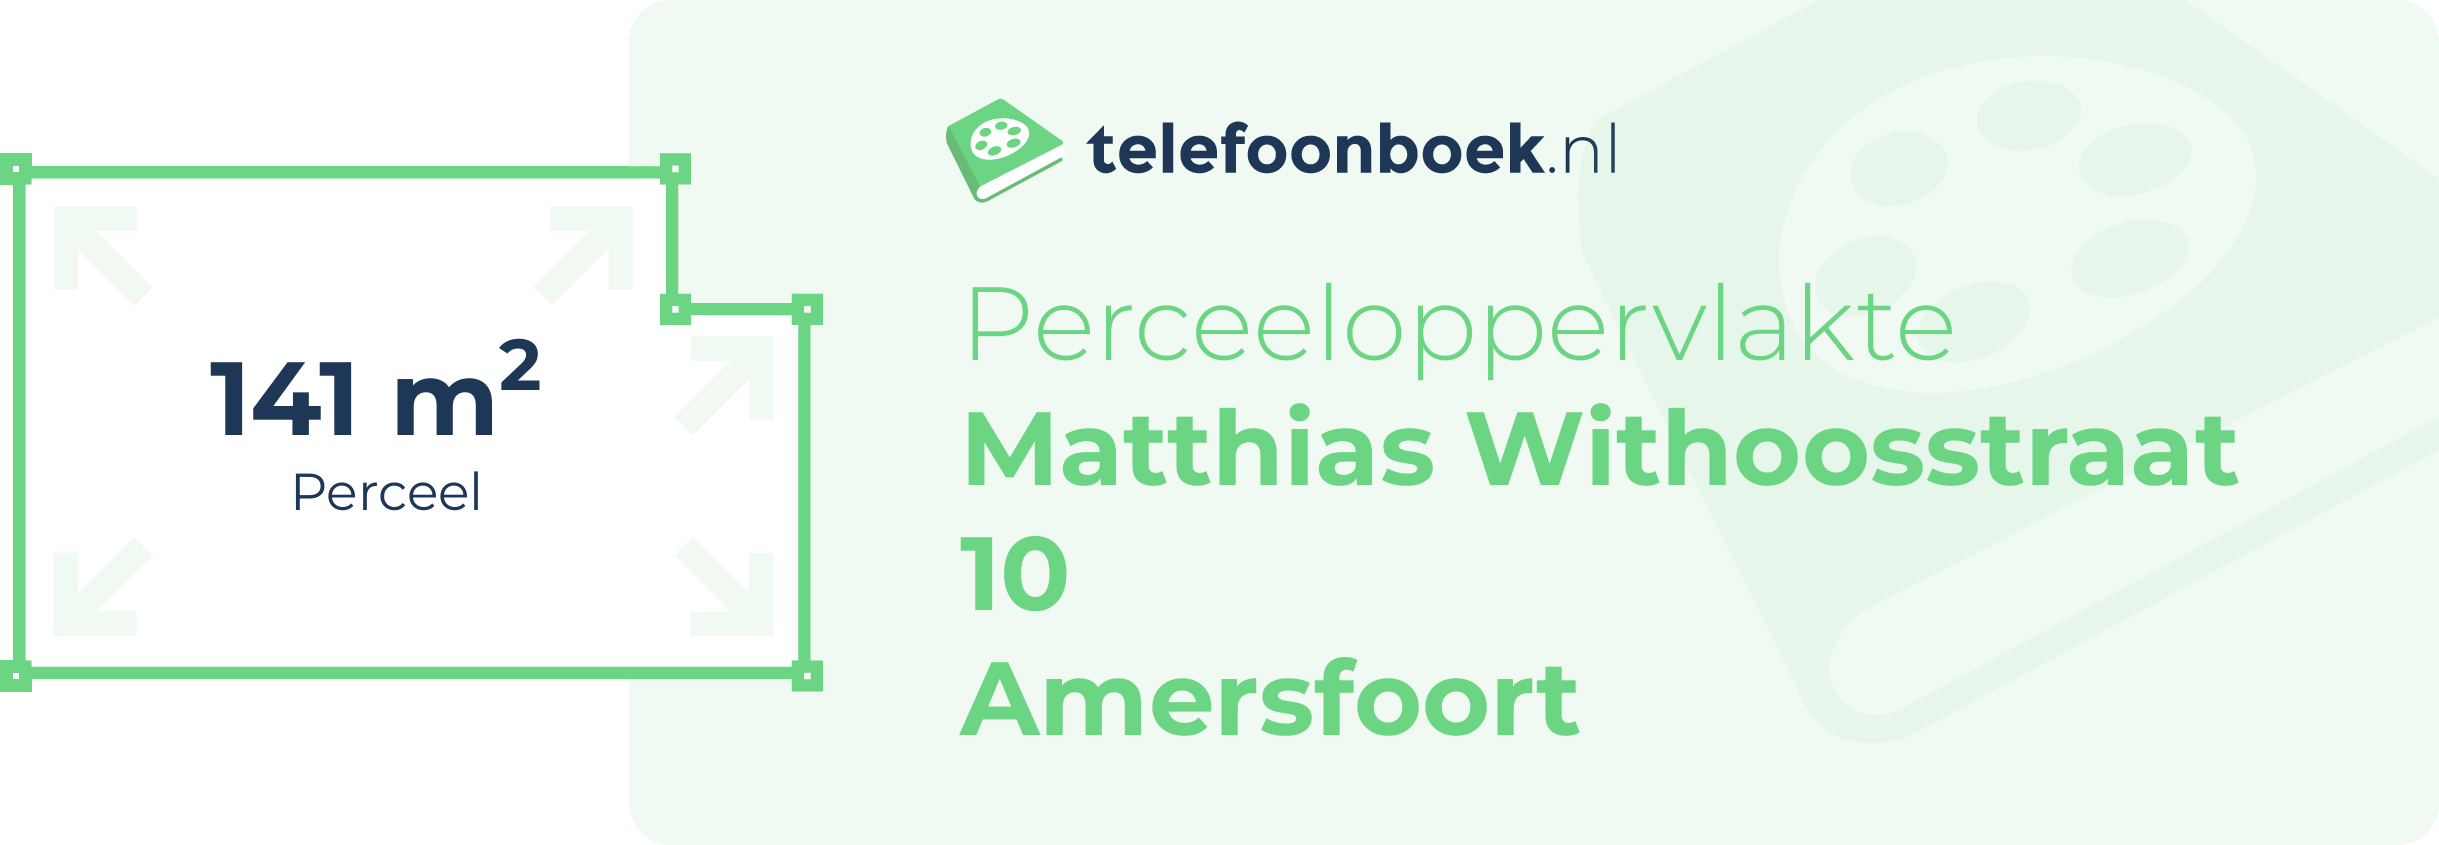 Perceeloppervlakte Matthias Withoosstraat 10 Amersfoort